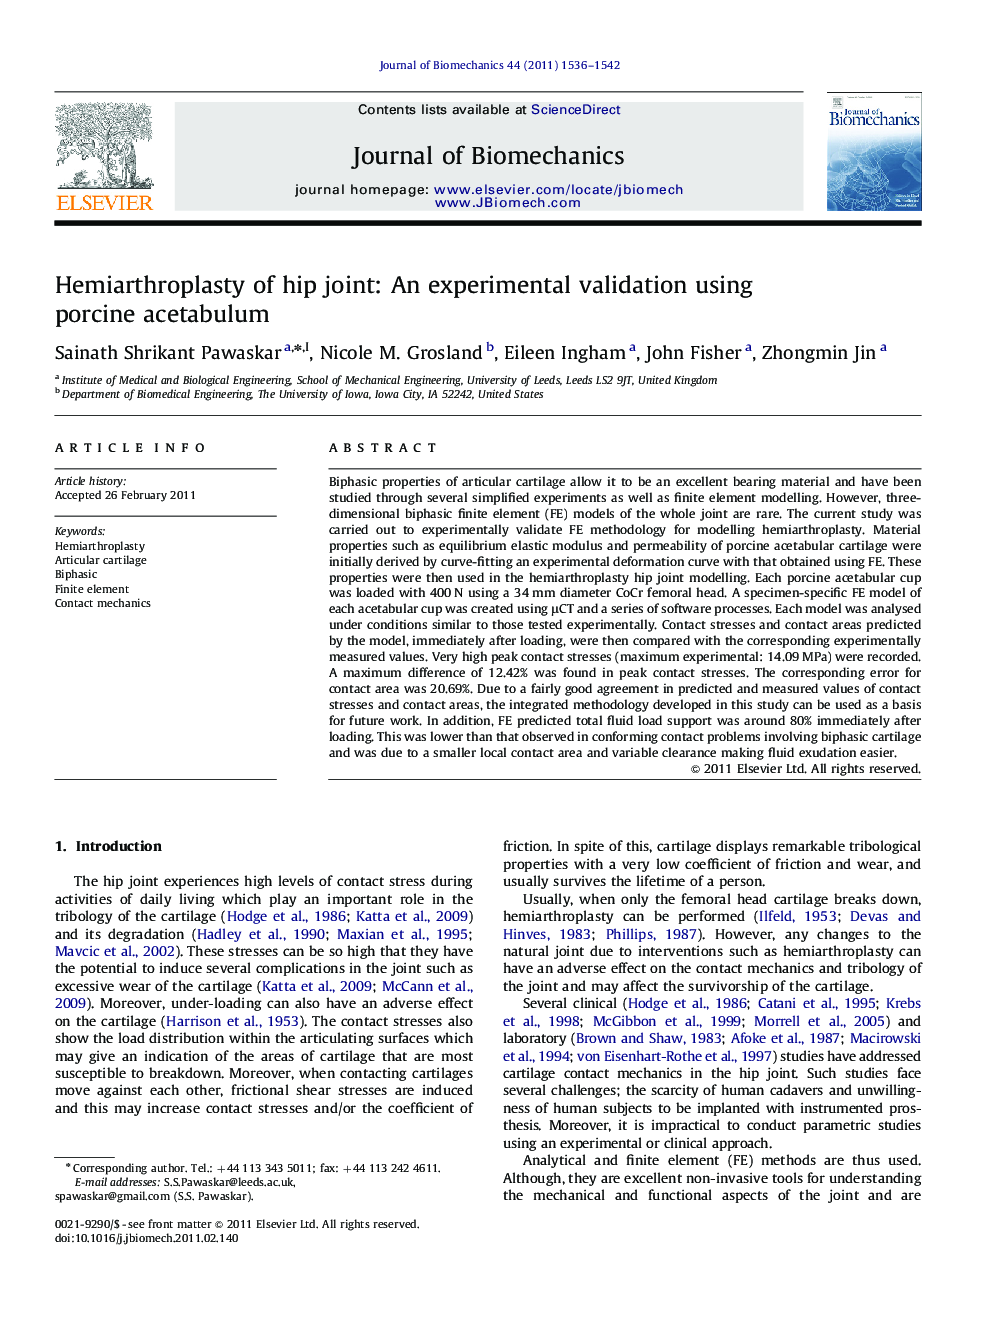 Hemiarthroplasty of hip joint: An experimental validation using porcine acetabulum